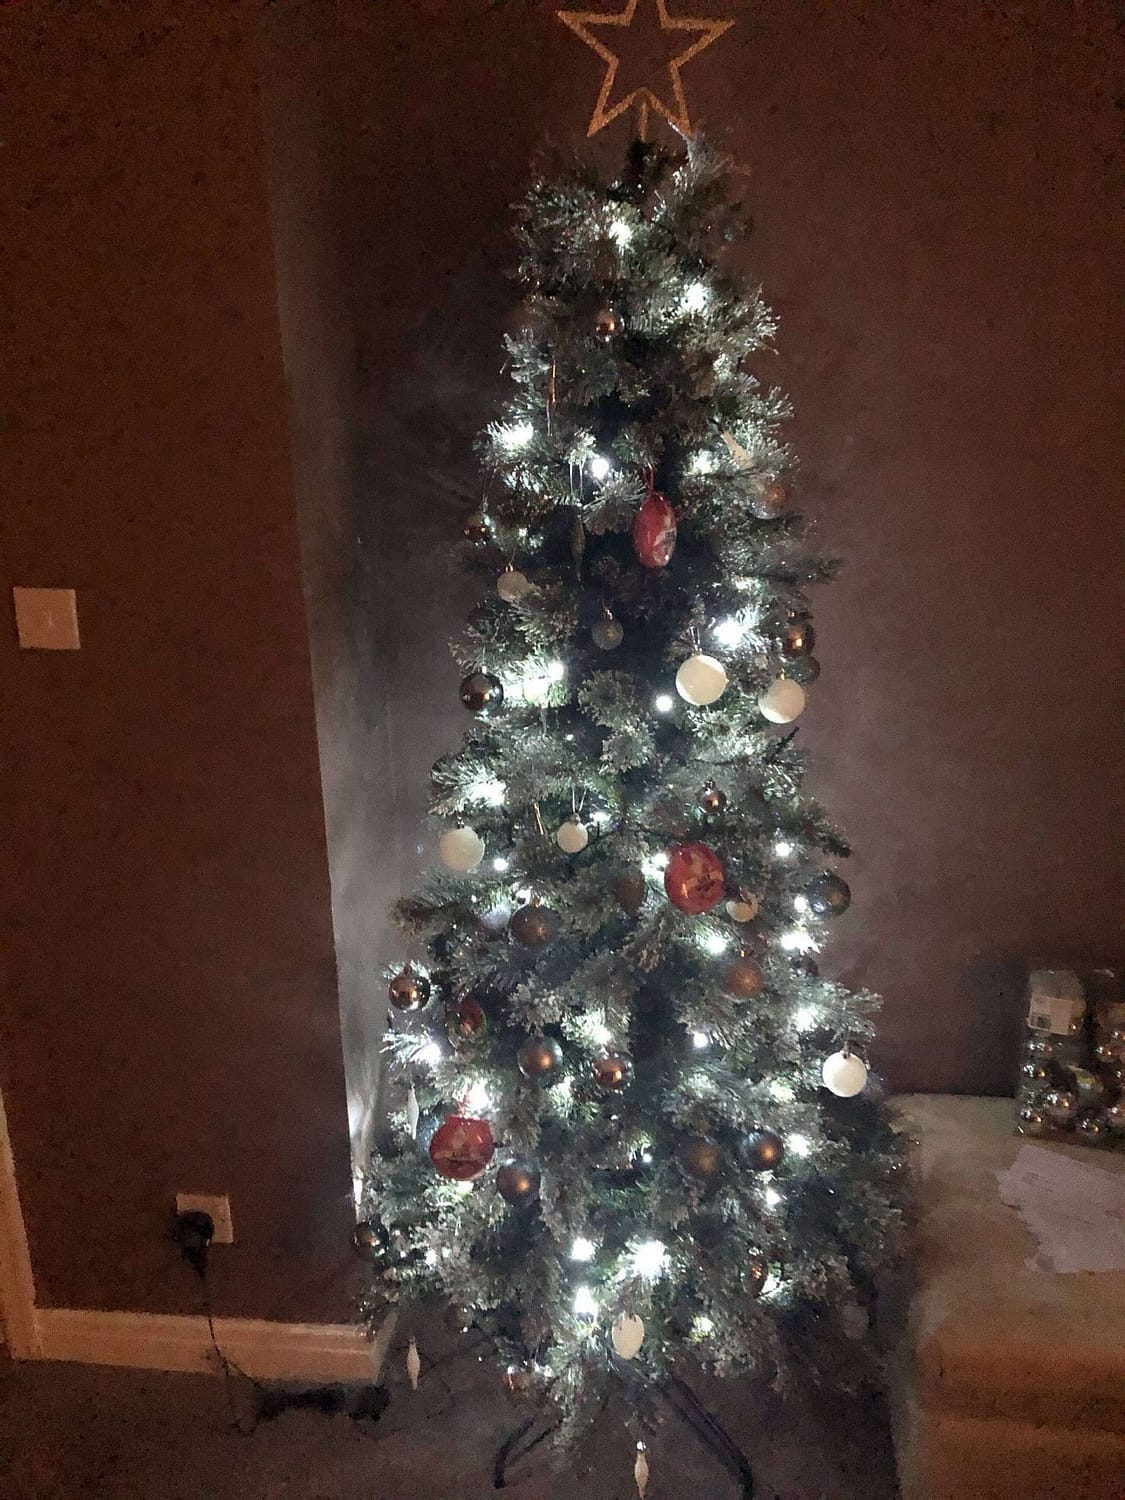 Christmas Tree with lights on